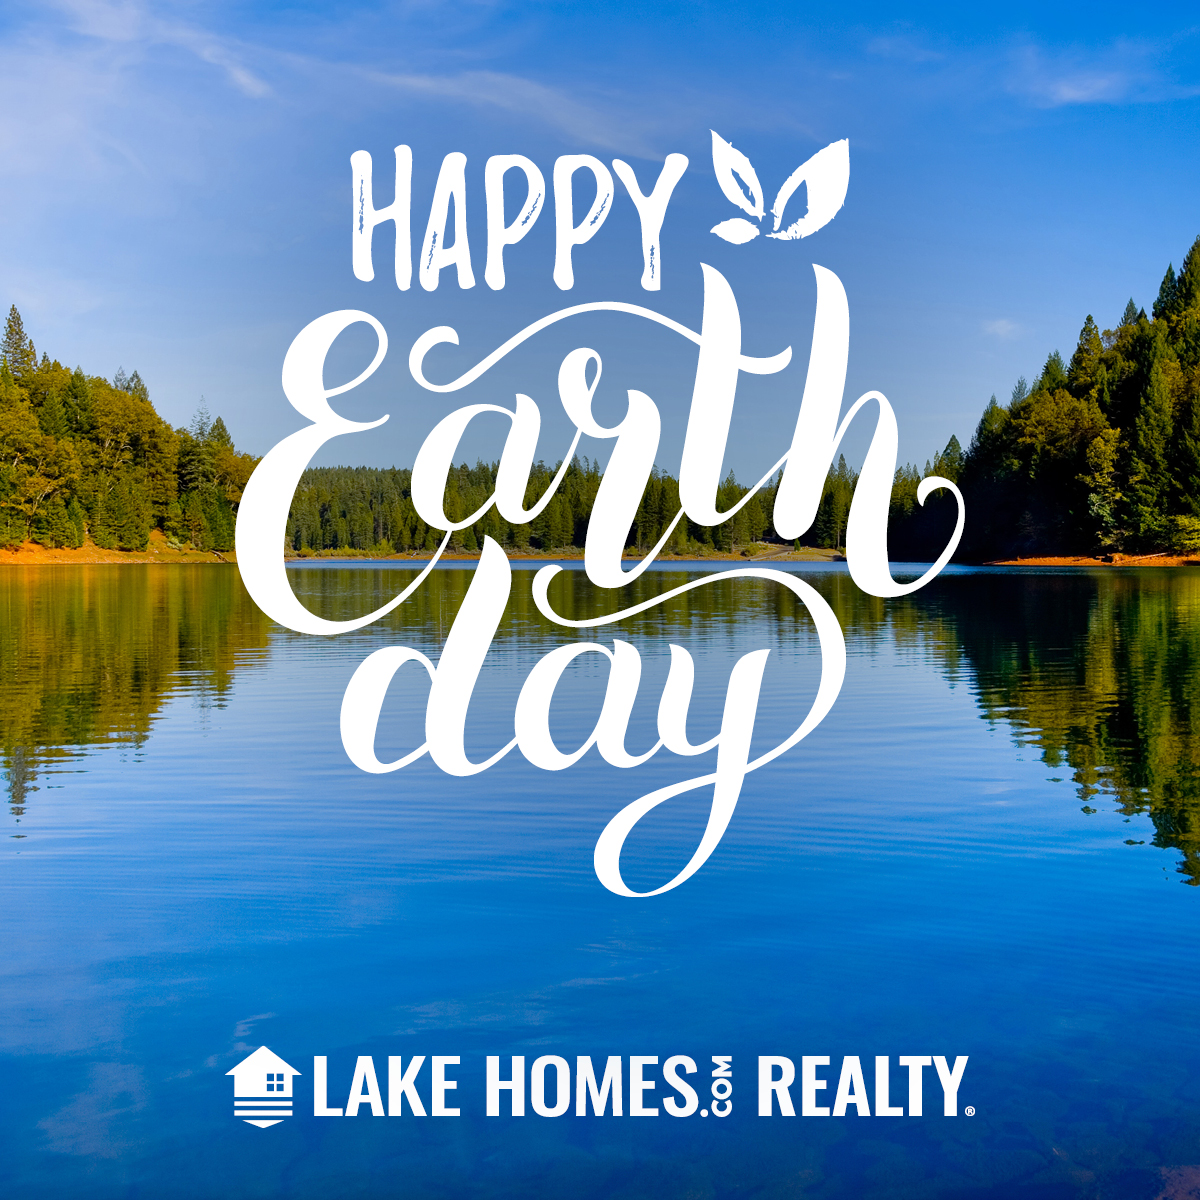 Happy Earth Day! Be sure to keep the lakes and Earth clean🌎♻️

#lakehomes #lakehomesrealty #lakeproperty #lakelbj #lakebuchanan #lakemarblefalls #inkslake #texashillcountry #texashighlandlakes #lakelife #lakeliving #earthday #happyearthday #recycle #gogreen